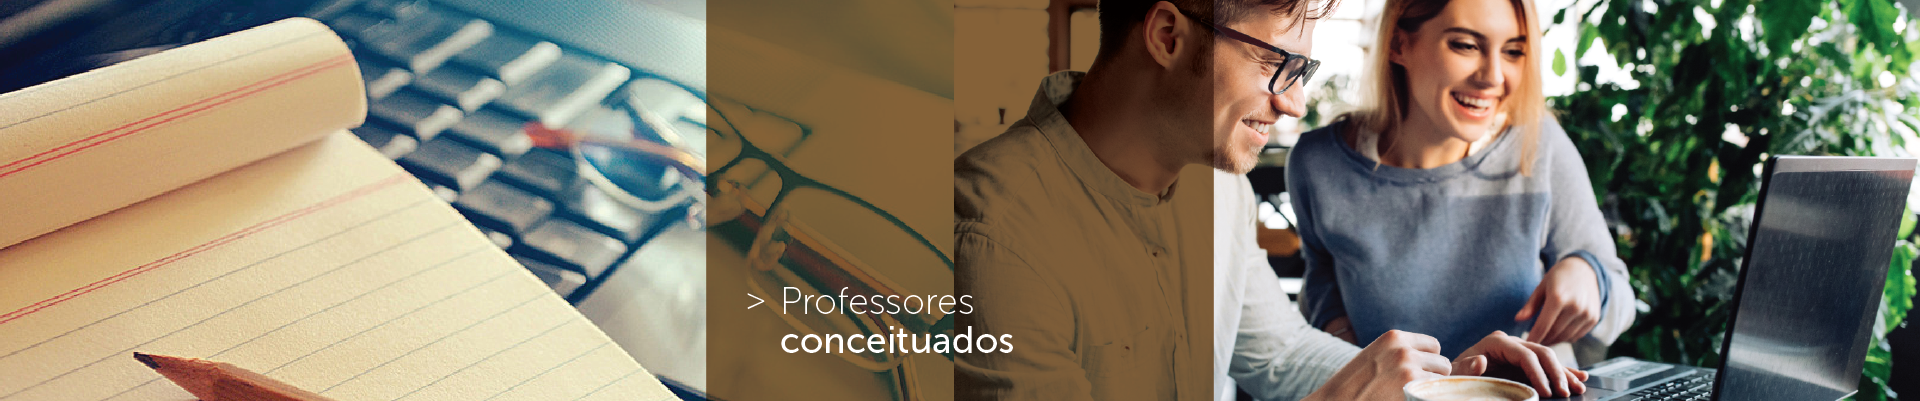 Professores | IbiJus - Instituto Brasileiro de Direito